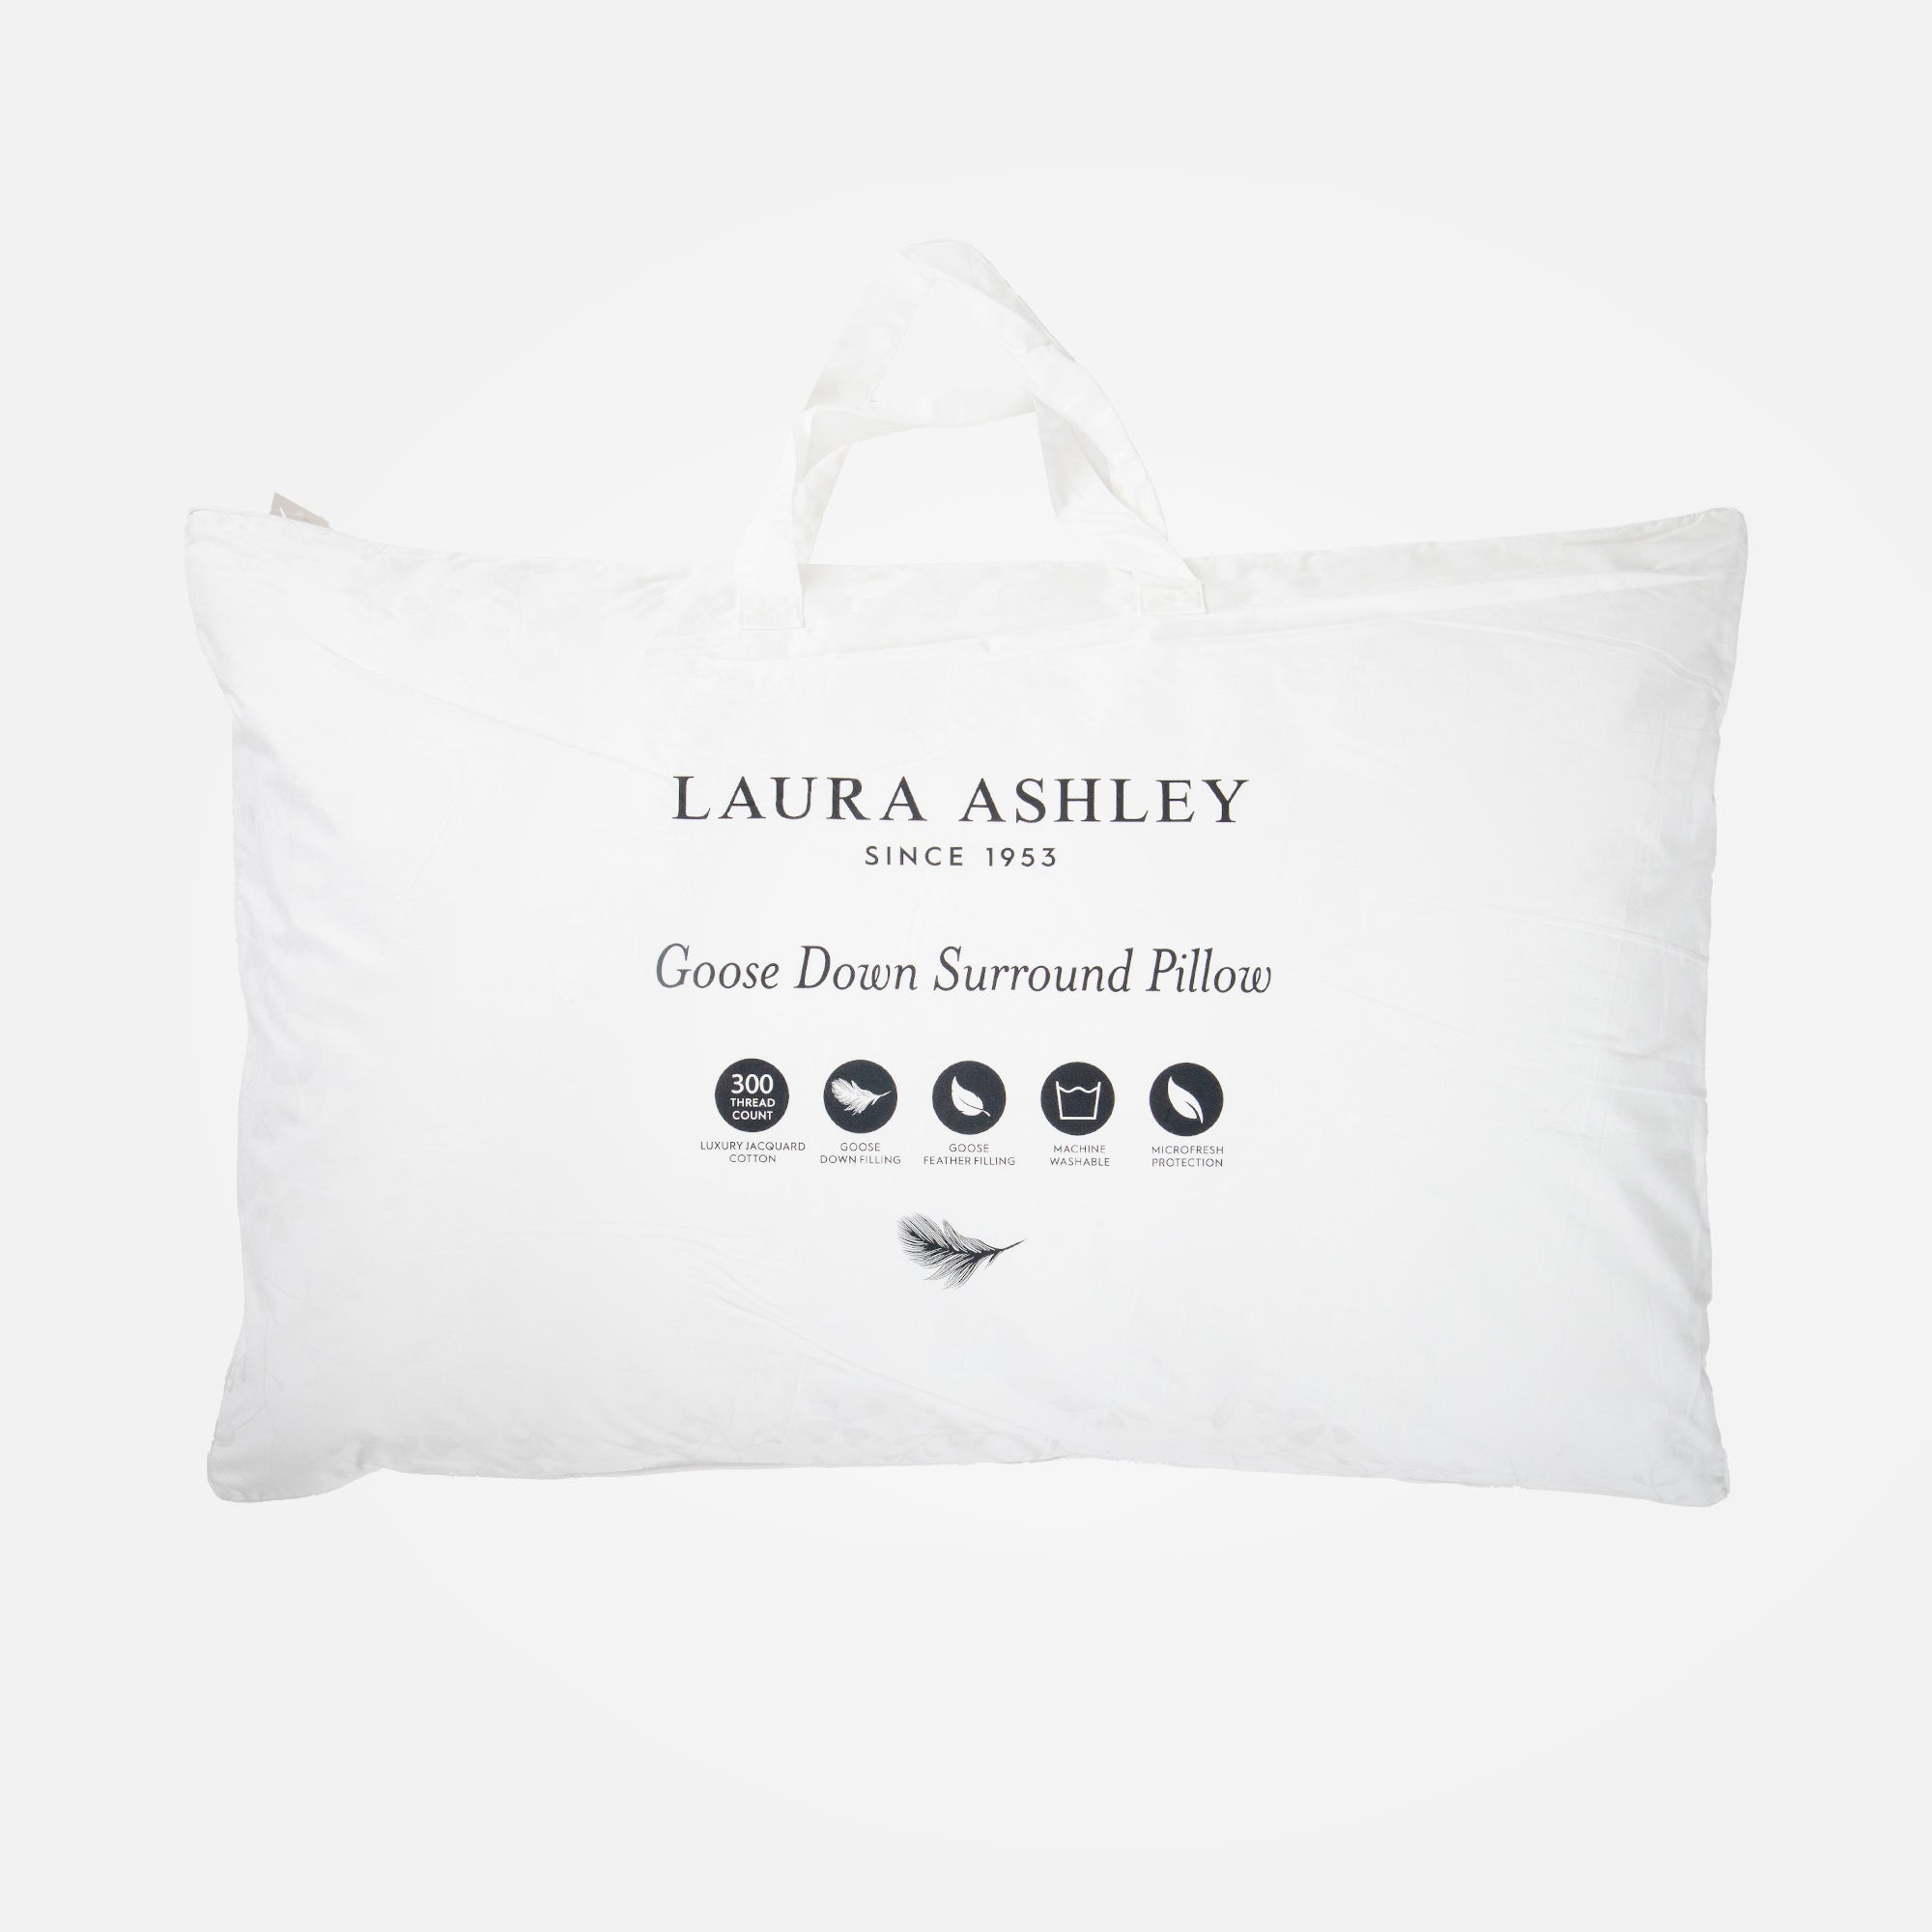 Pillows - Laura Ashley Goose Down Surround Pillow